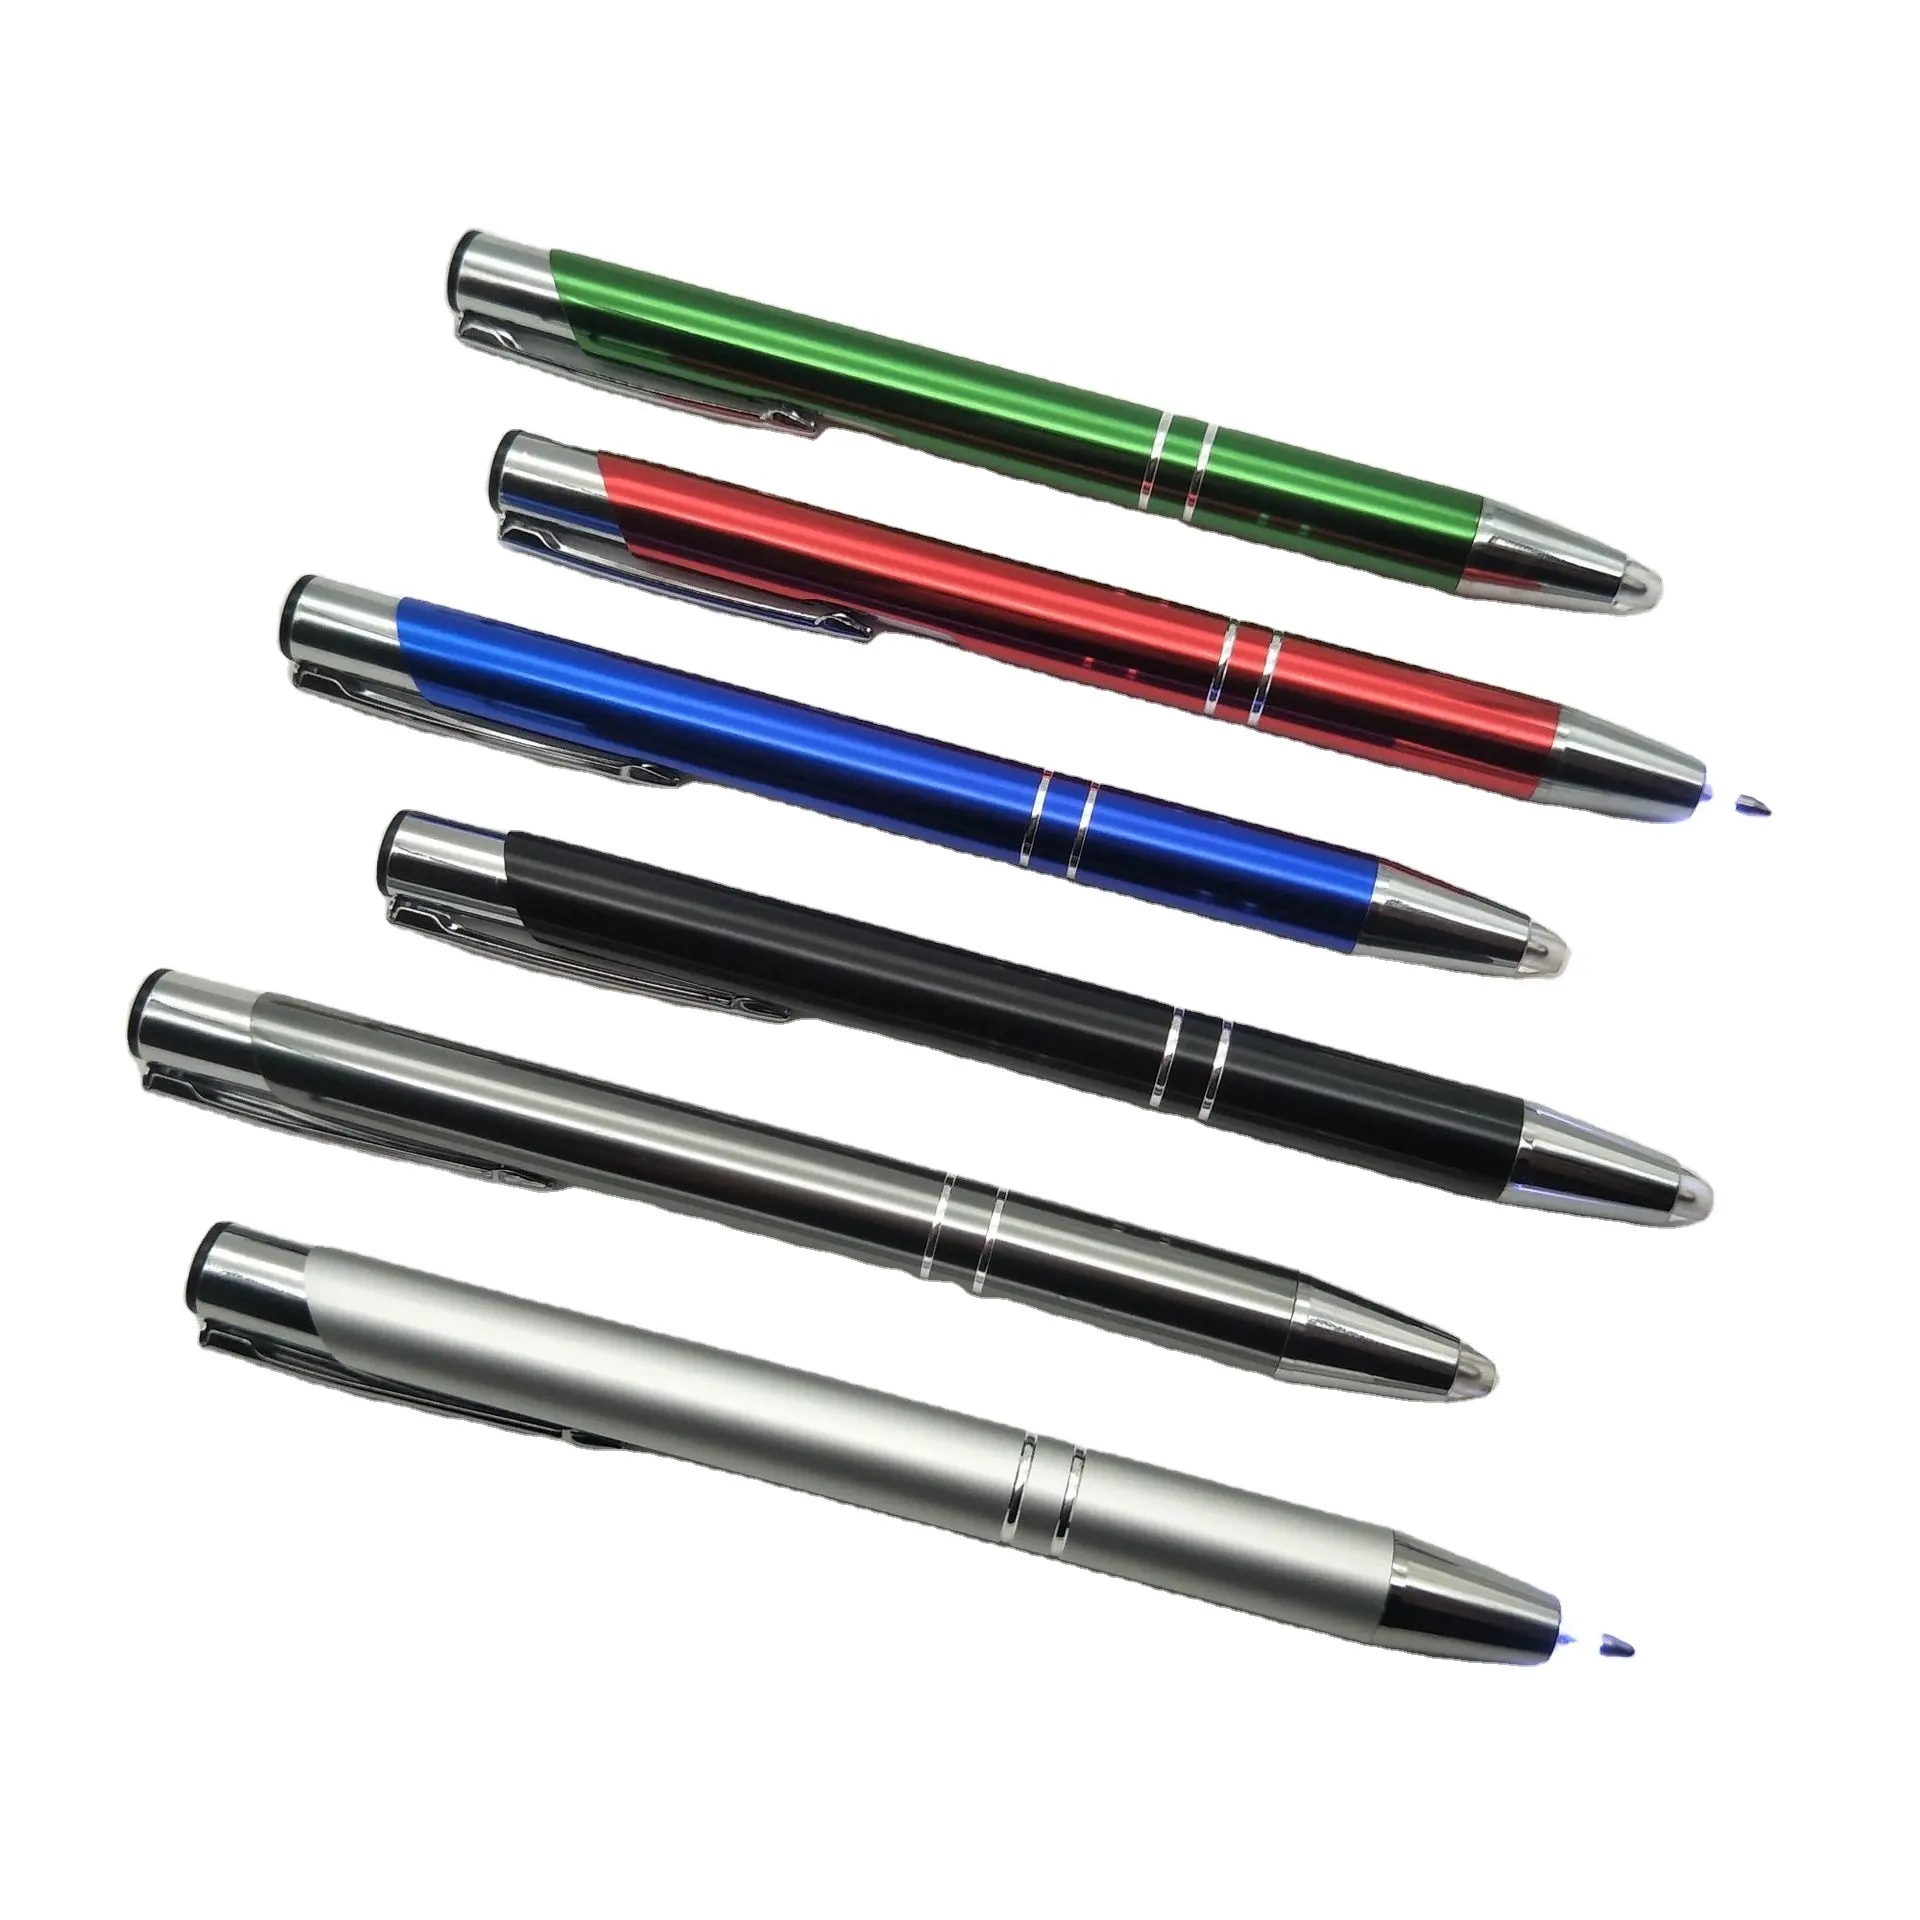 Promotion product aluminum ball pen with tip light logo pen light